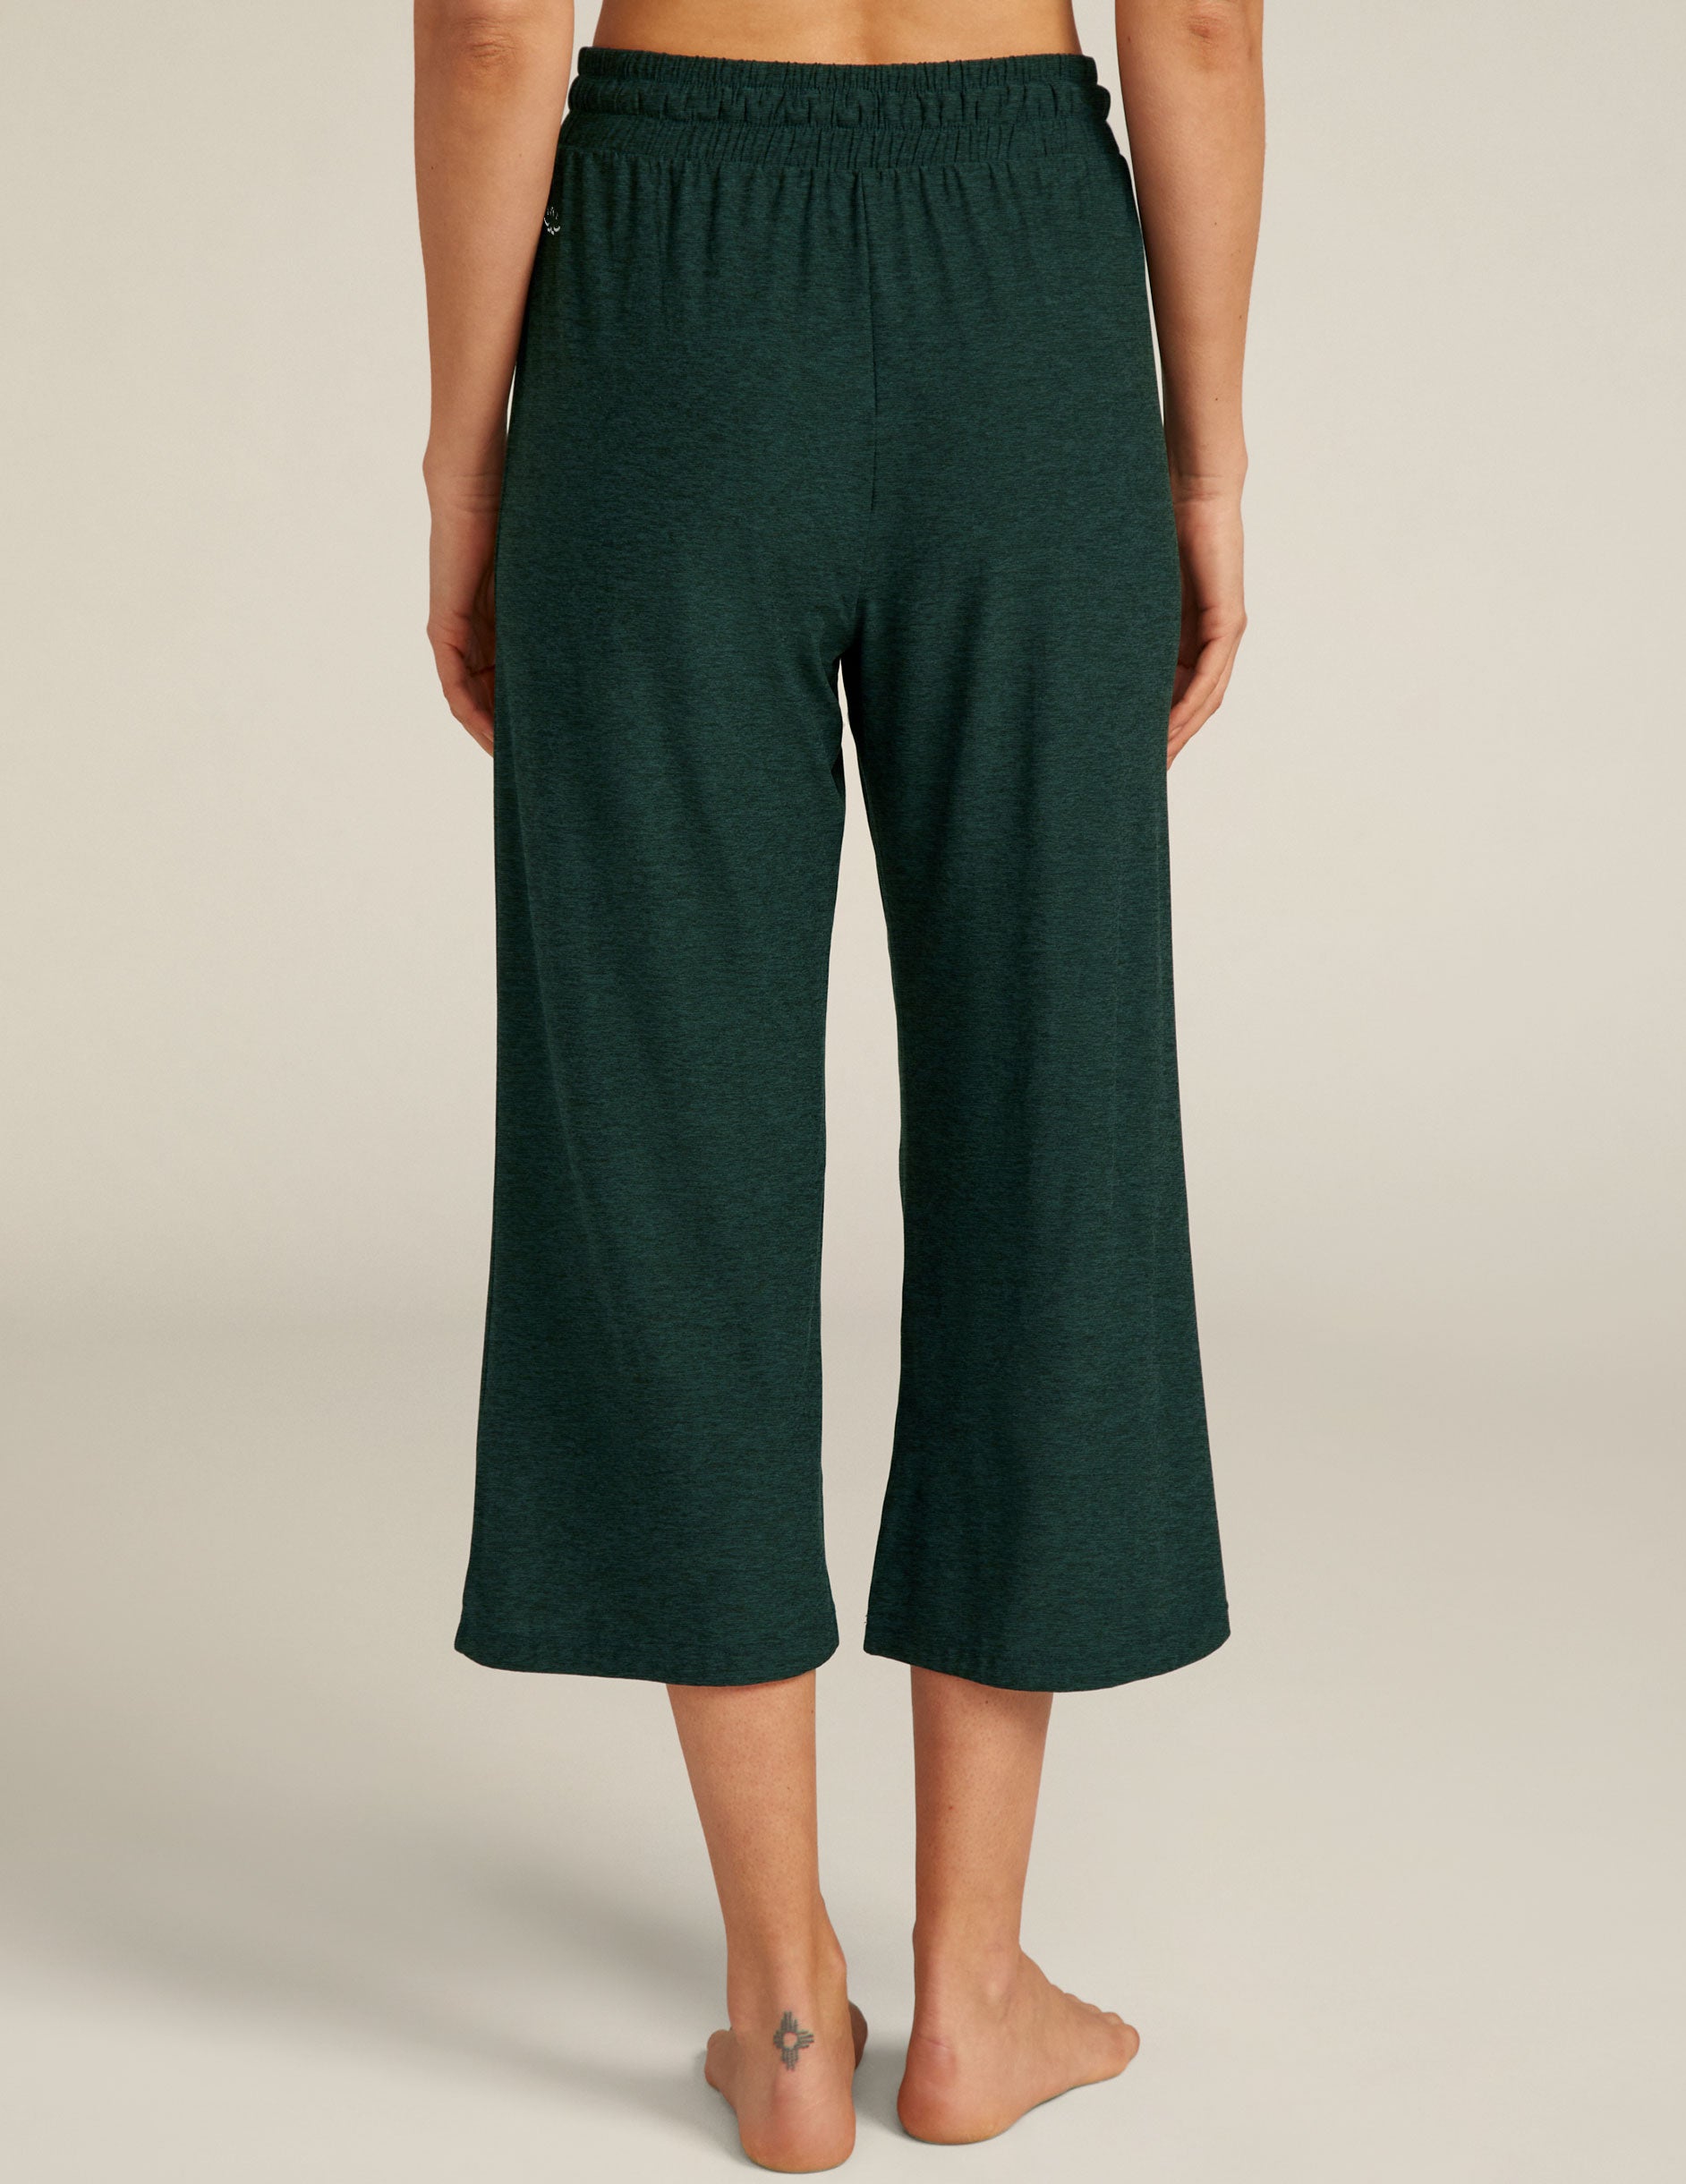 green capri length sleep pants with a drawstring at waistband. 